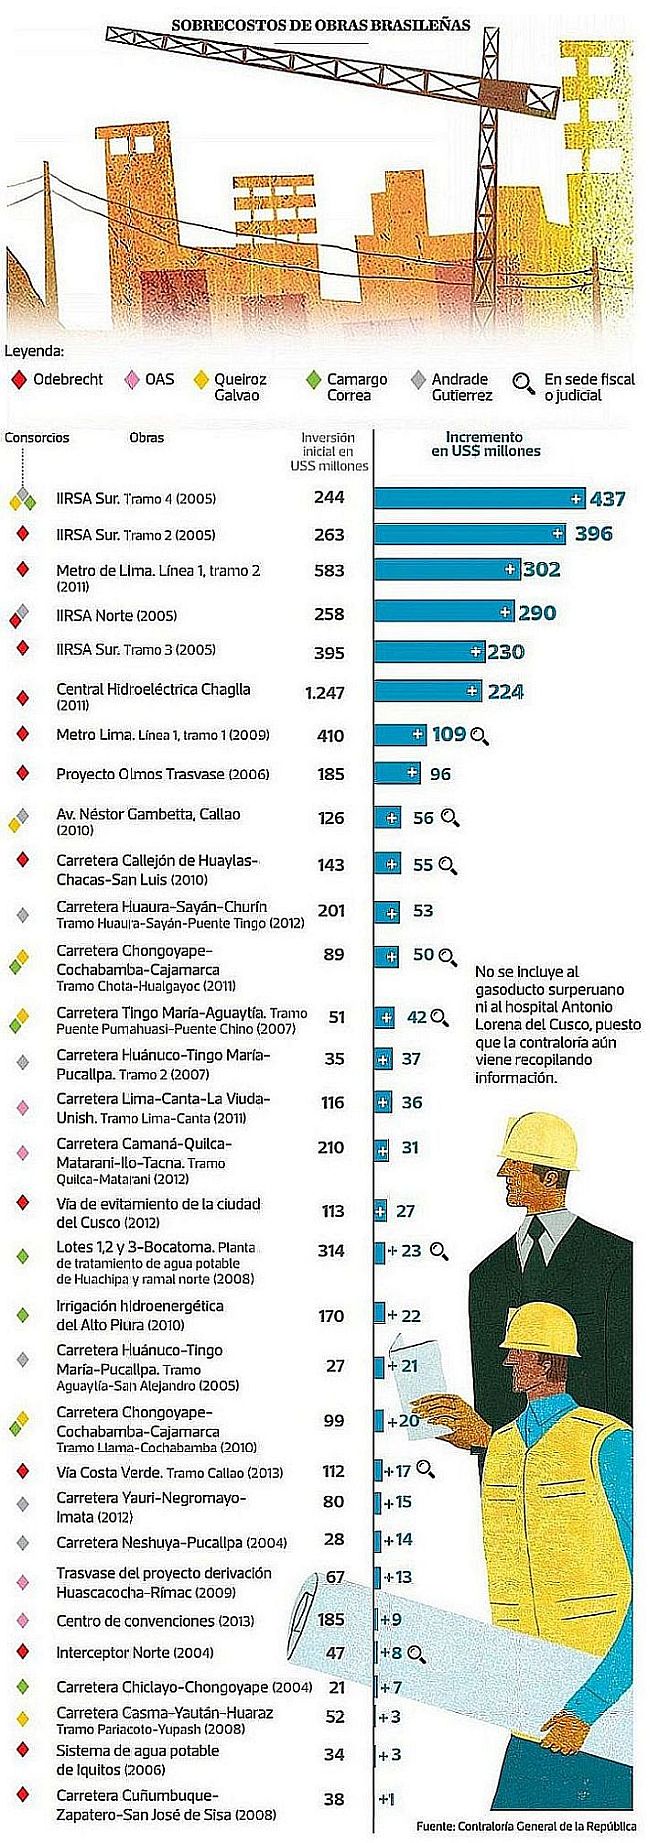 [Foto] Lava Jato: investigan diez obras de cinco empresas brasileñas